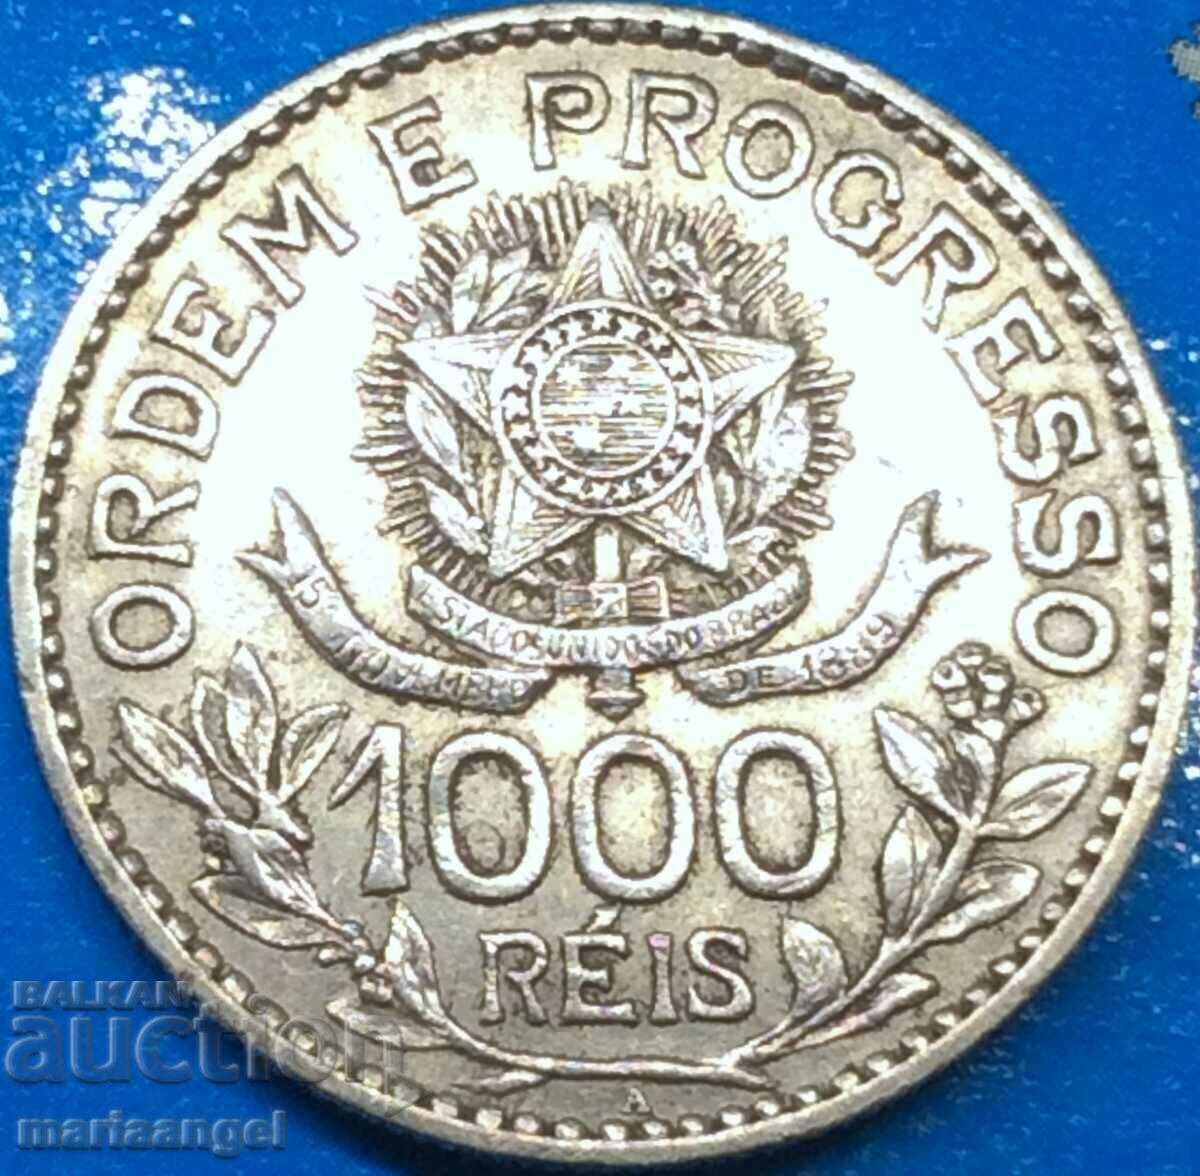 Brazil 1913 1000 reis 9.96g silver - rare